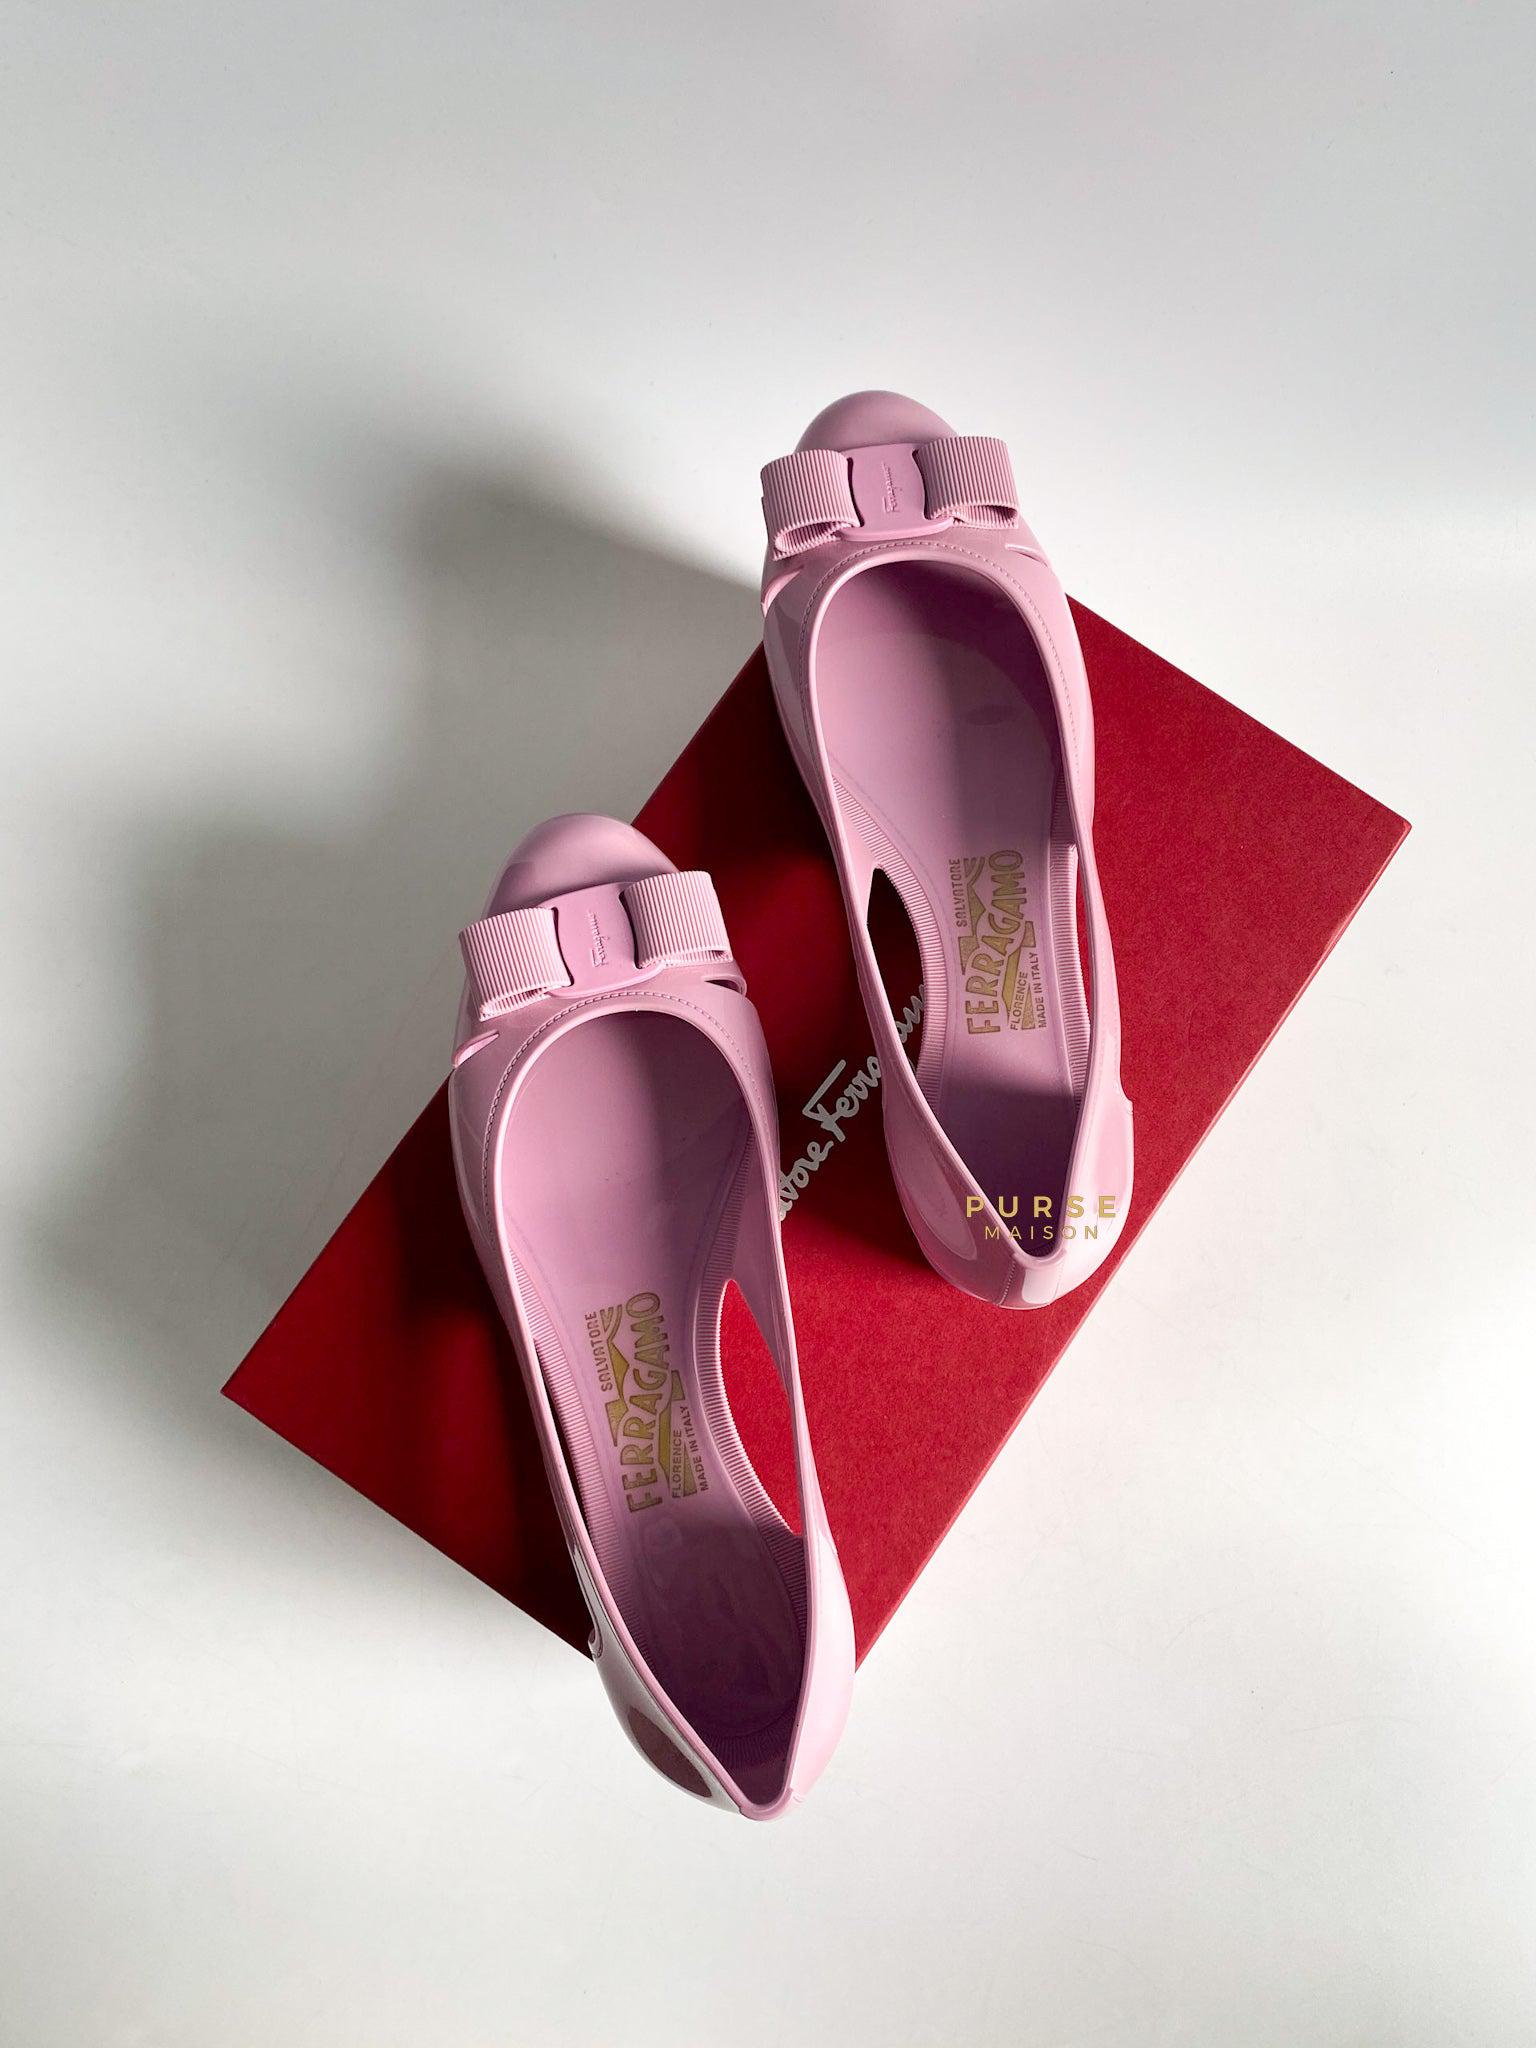 Salvatore Ferragamo Vara Jelly Shoes 3.0cm (Dark pink) Size 7 US (25cm)